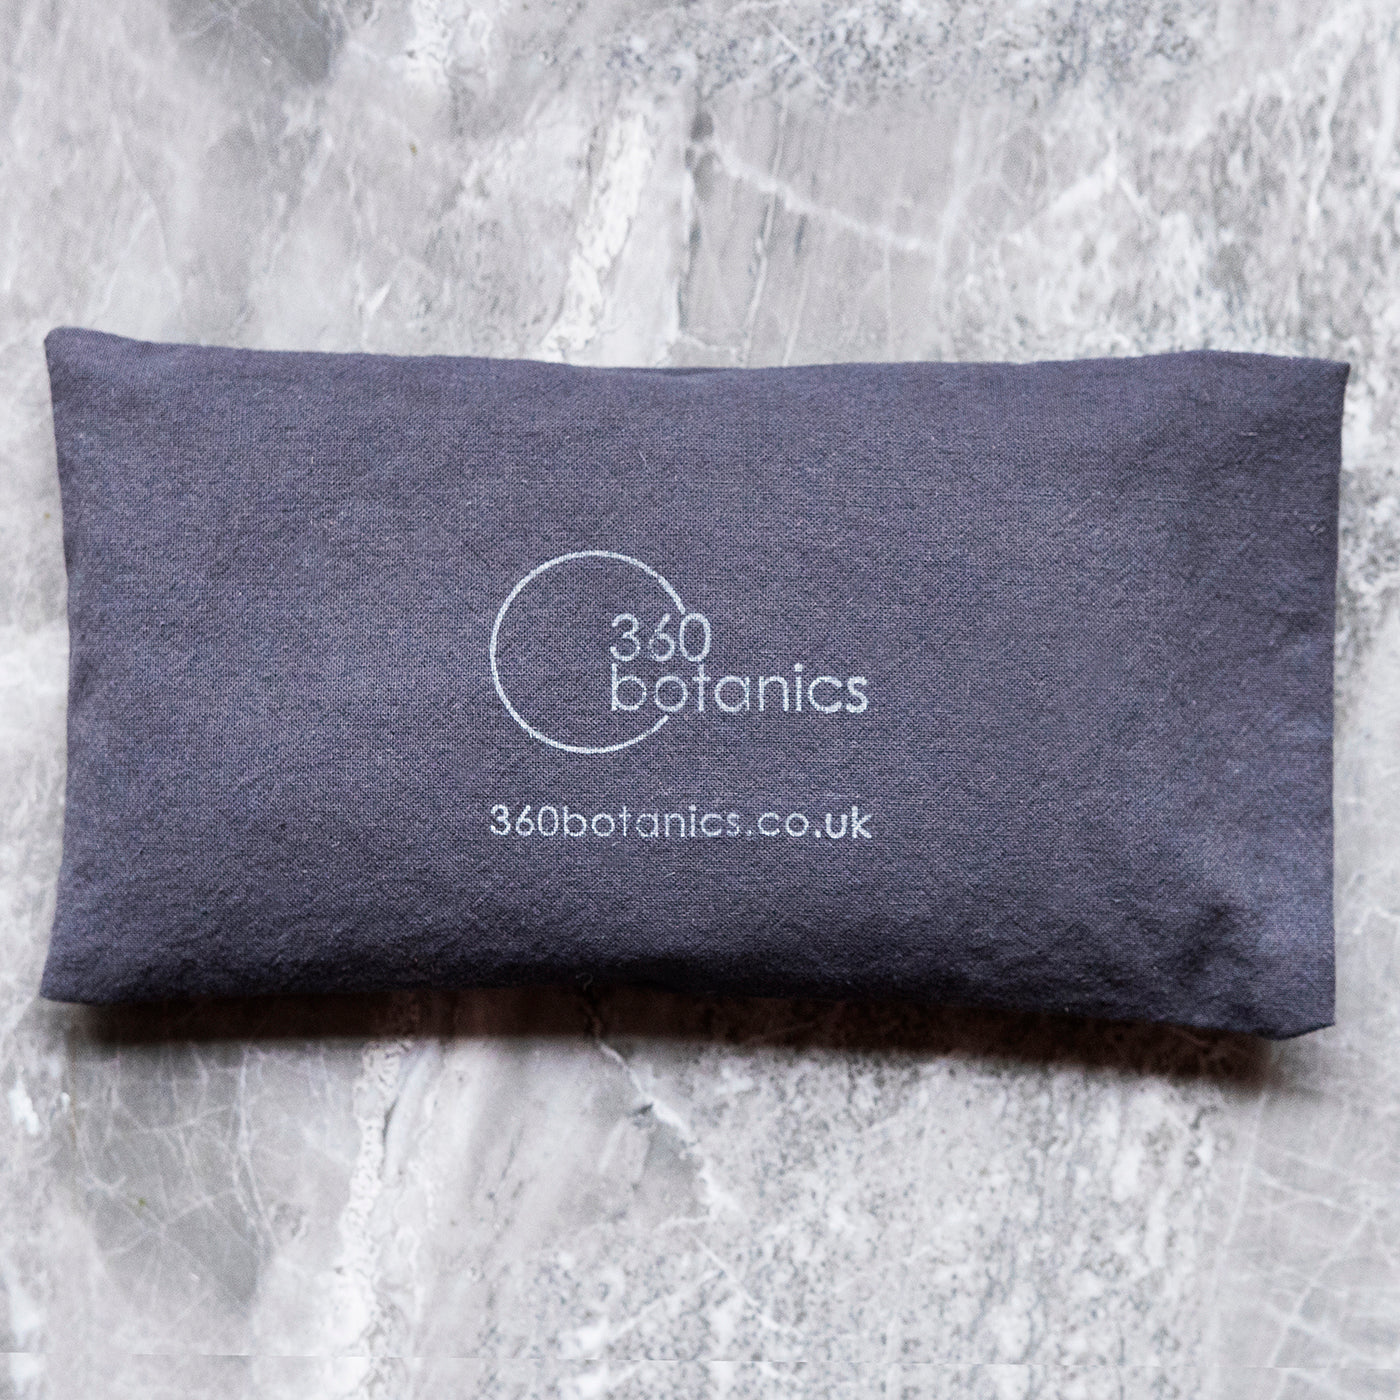  A navy blue eye pillow with the white logo "360 Botanics" and the website "360botanics.co.uk" on a marbled grey background.